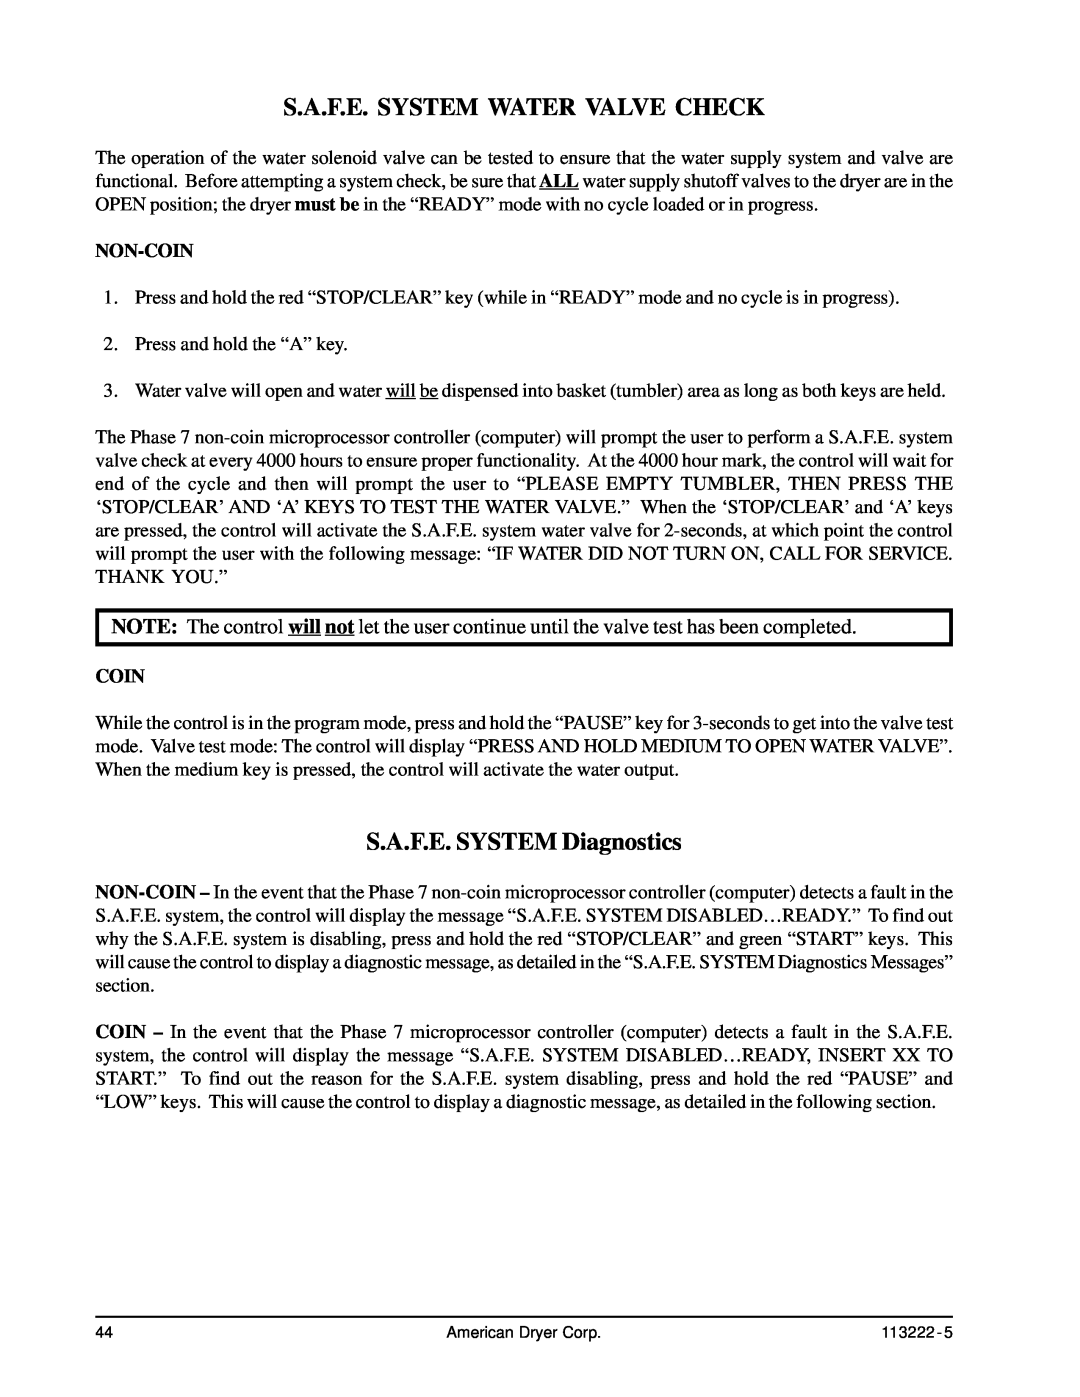 American Dryer Corp AD-24 Phase 7 S.A.F.E. System Water Valve Check, S.A.F.E. SYSTEM Diagnostics, Non-Coin 